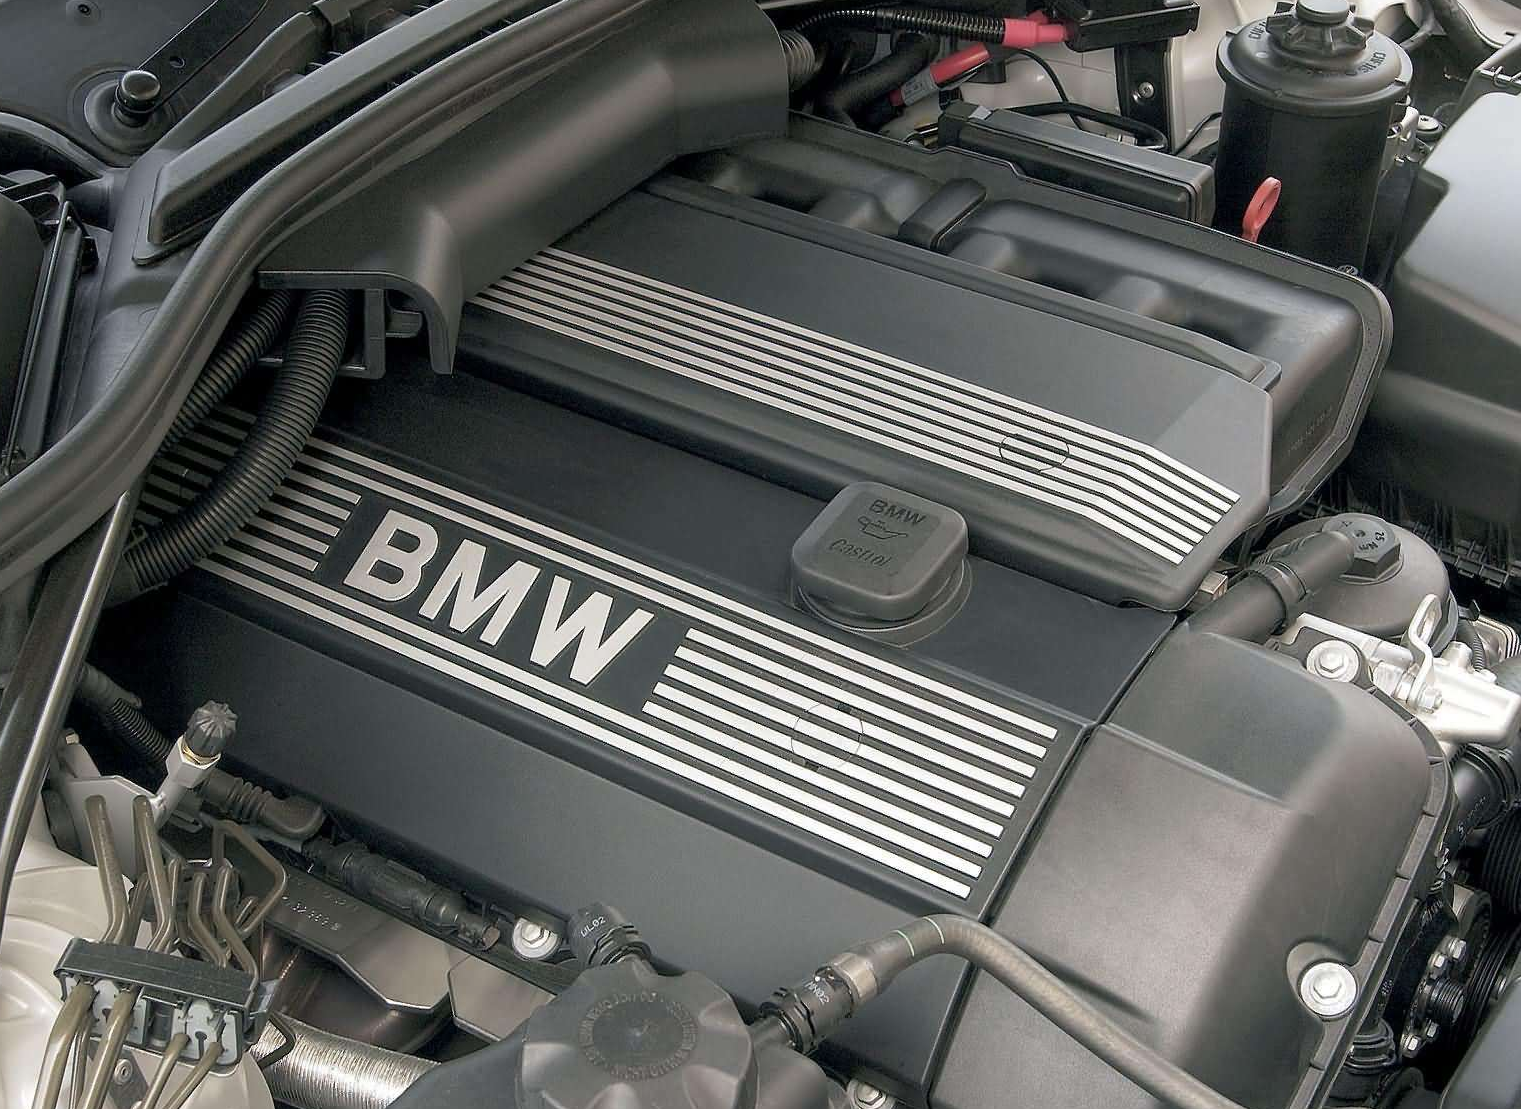 Bmw m 54. БМВ е46 м54. BMW e60 m54. BMW e60 под капотом. 530i e60 мотор.